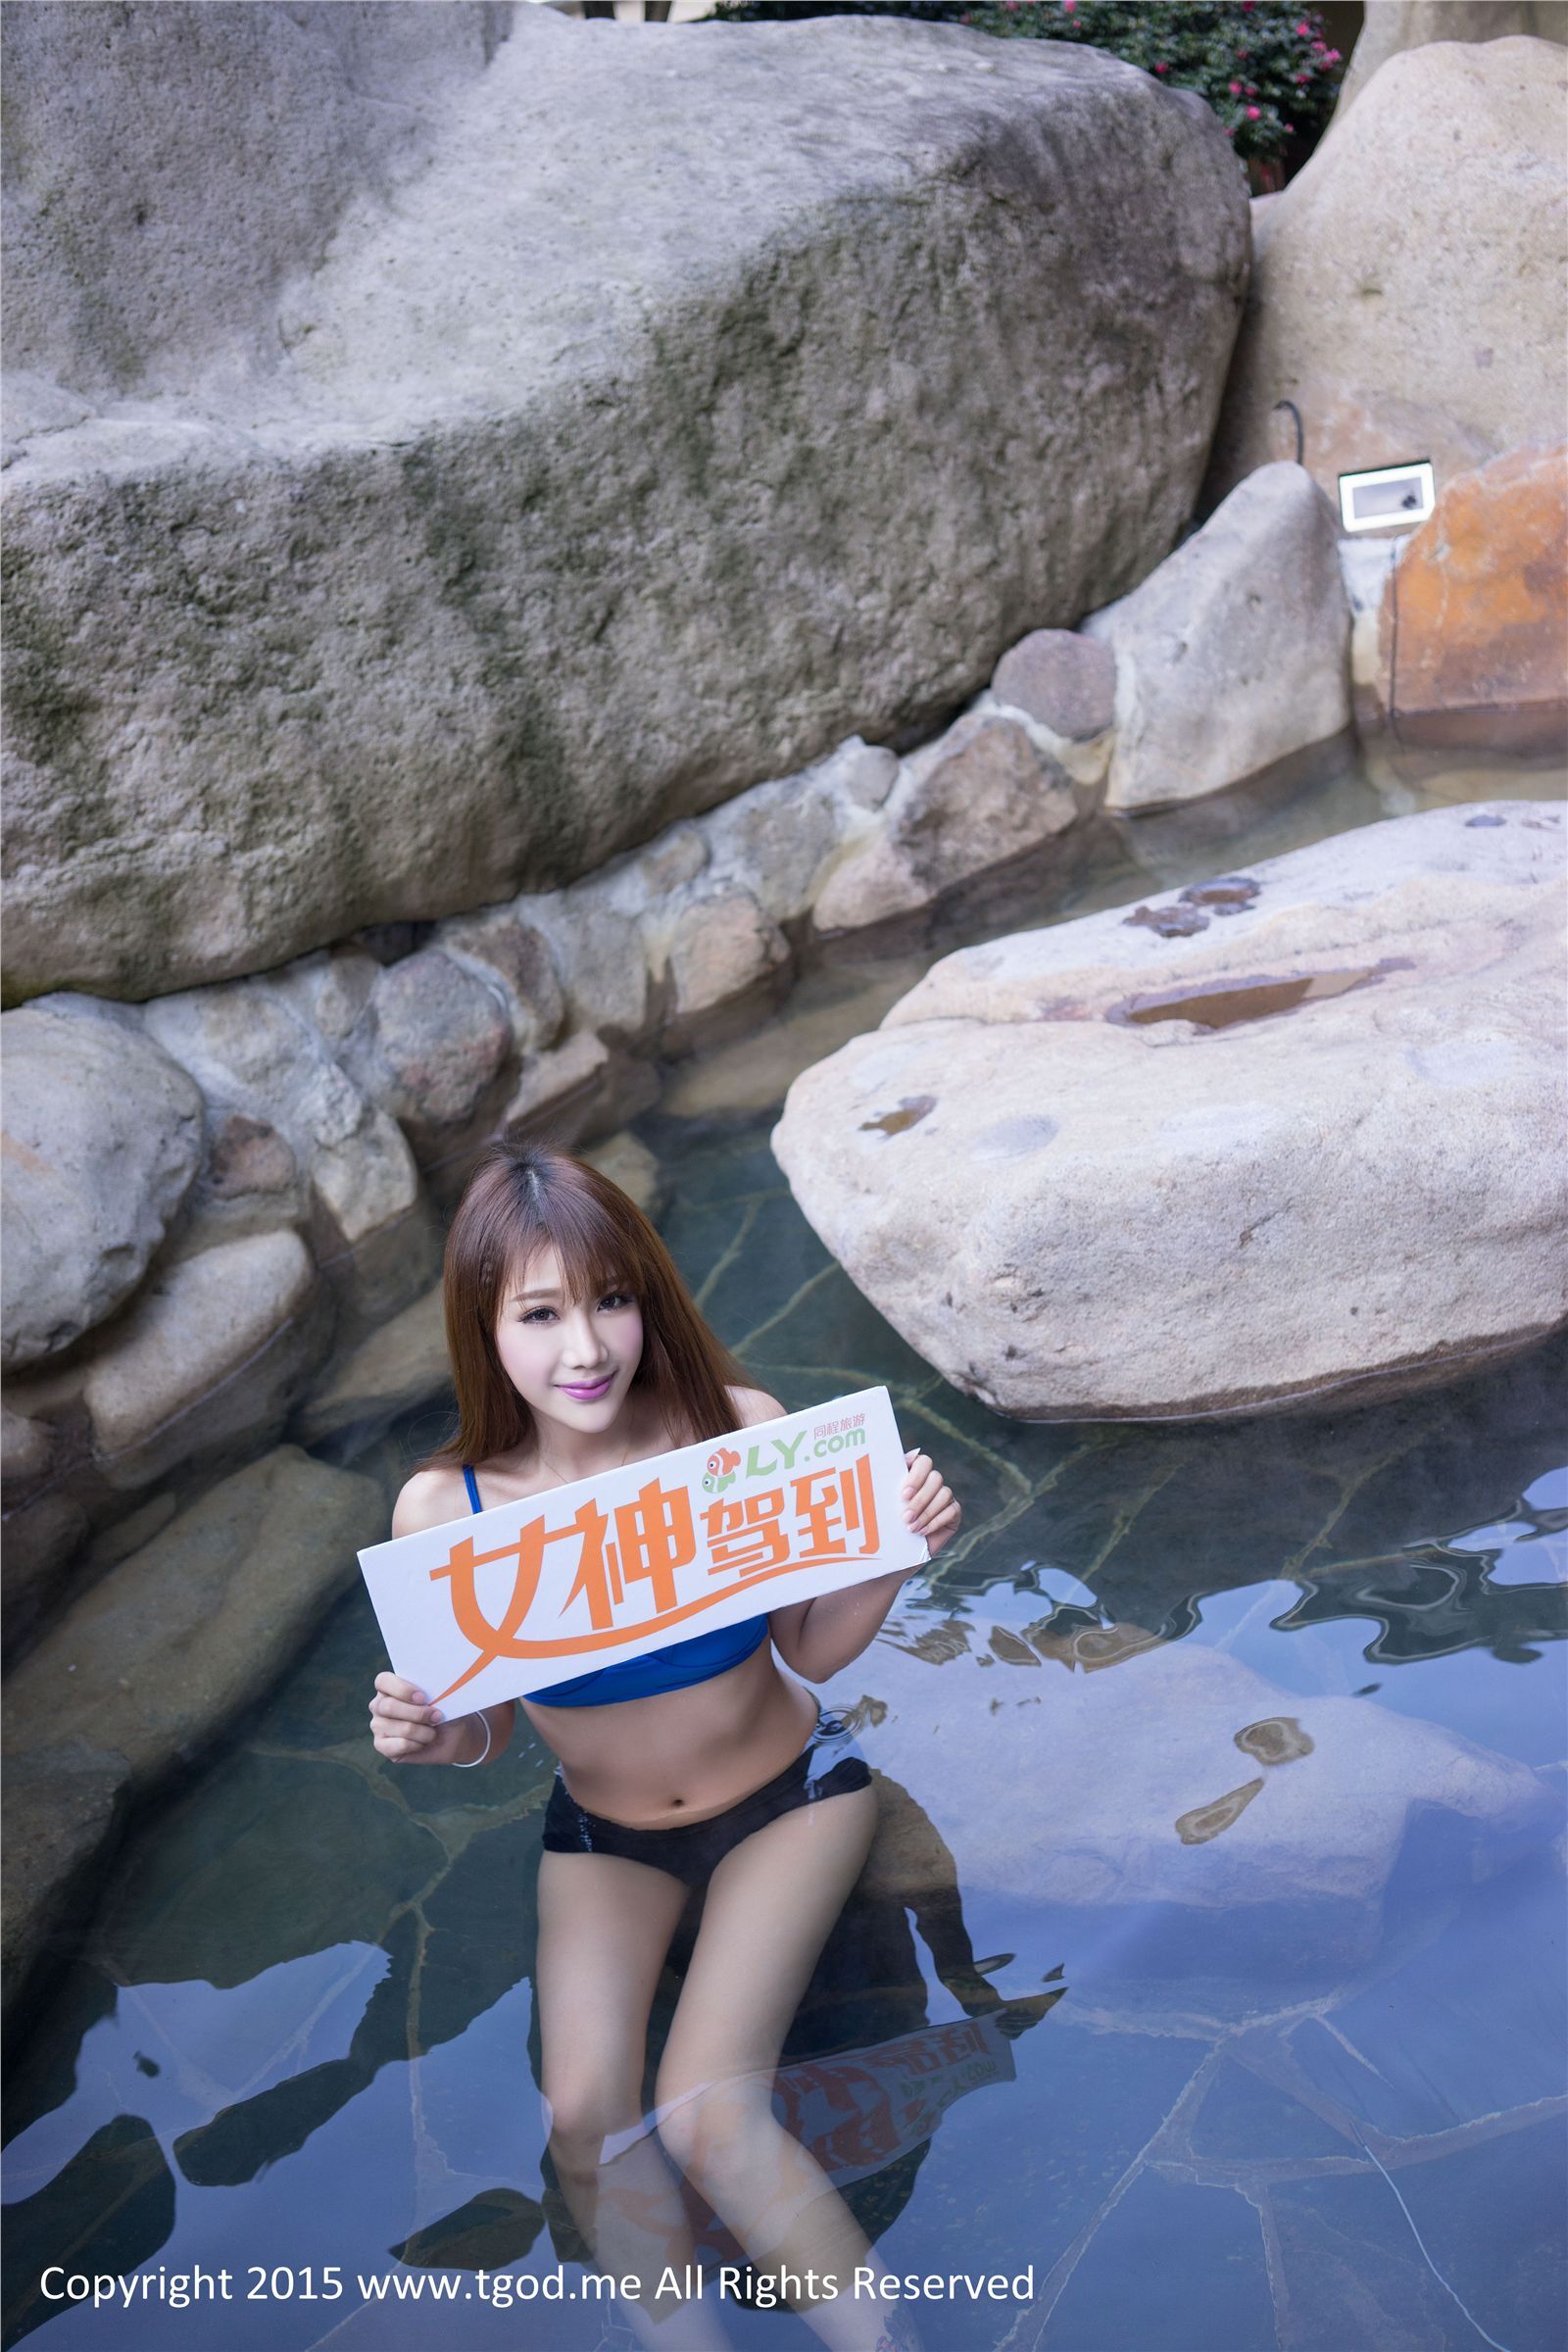 [tgod push goddess] April 23, 2015: akiki Zhu Ruomu of Niutoushan hot spring in Wuyi